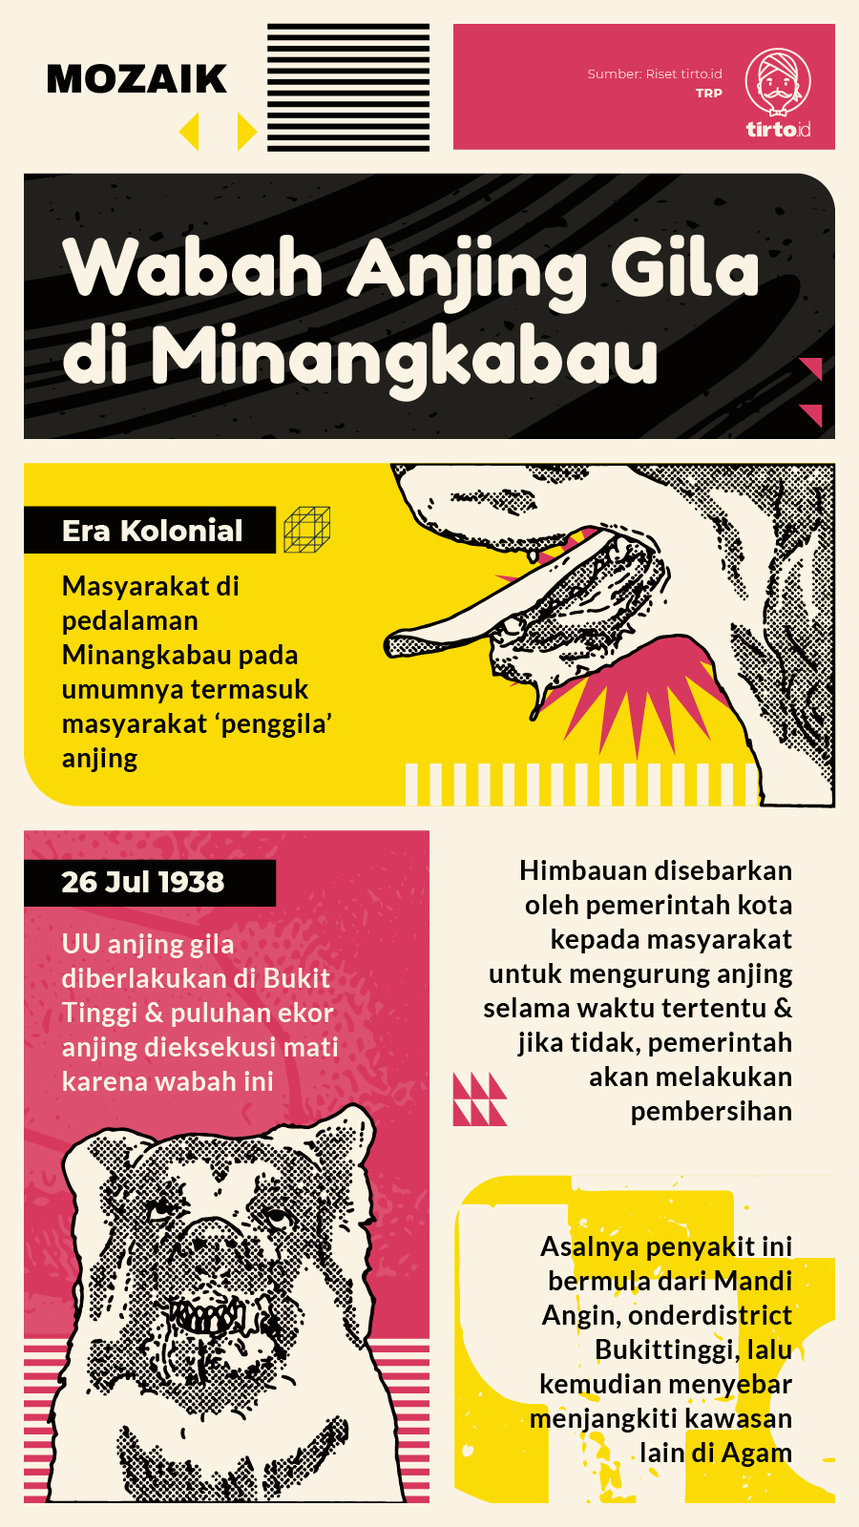 Infografik Mozaik Anjing Gila Minangkabau